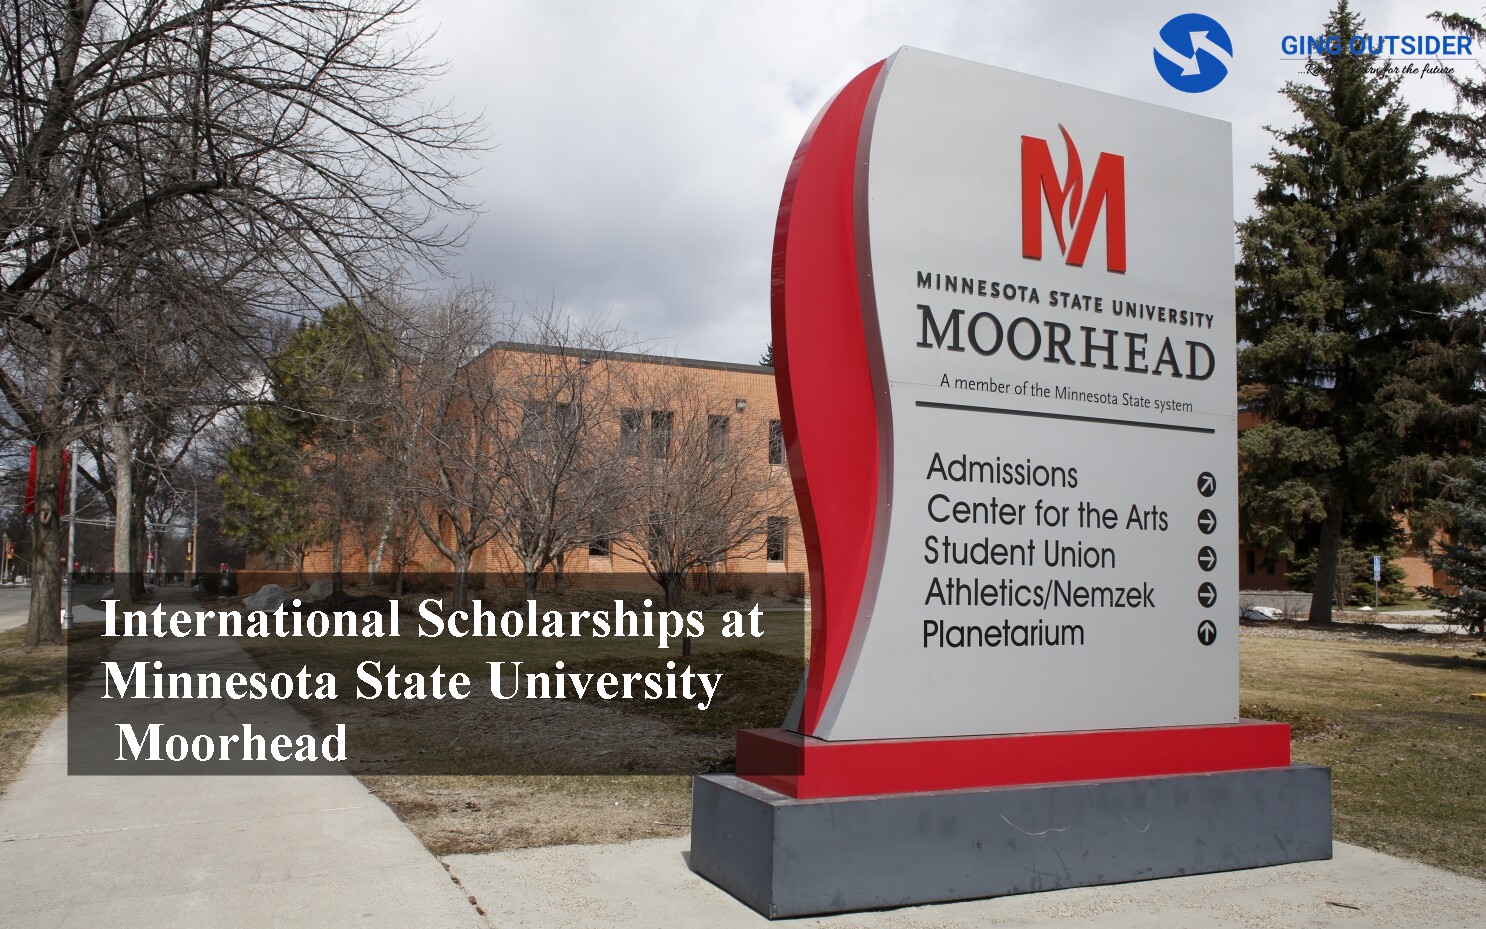 International Scholarships at Minnesota State University Moorhead